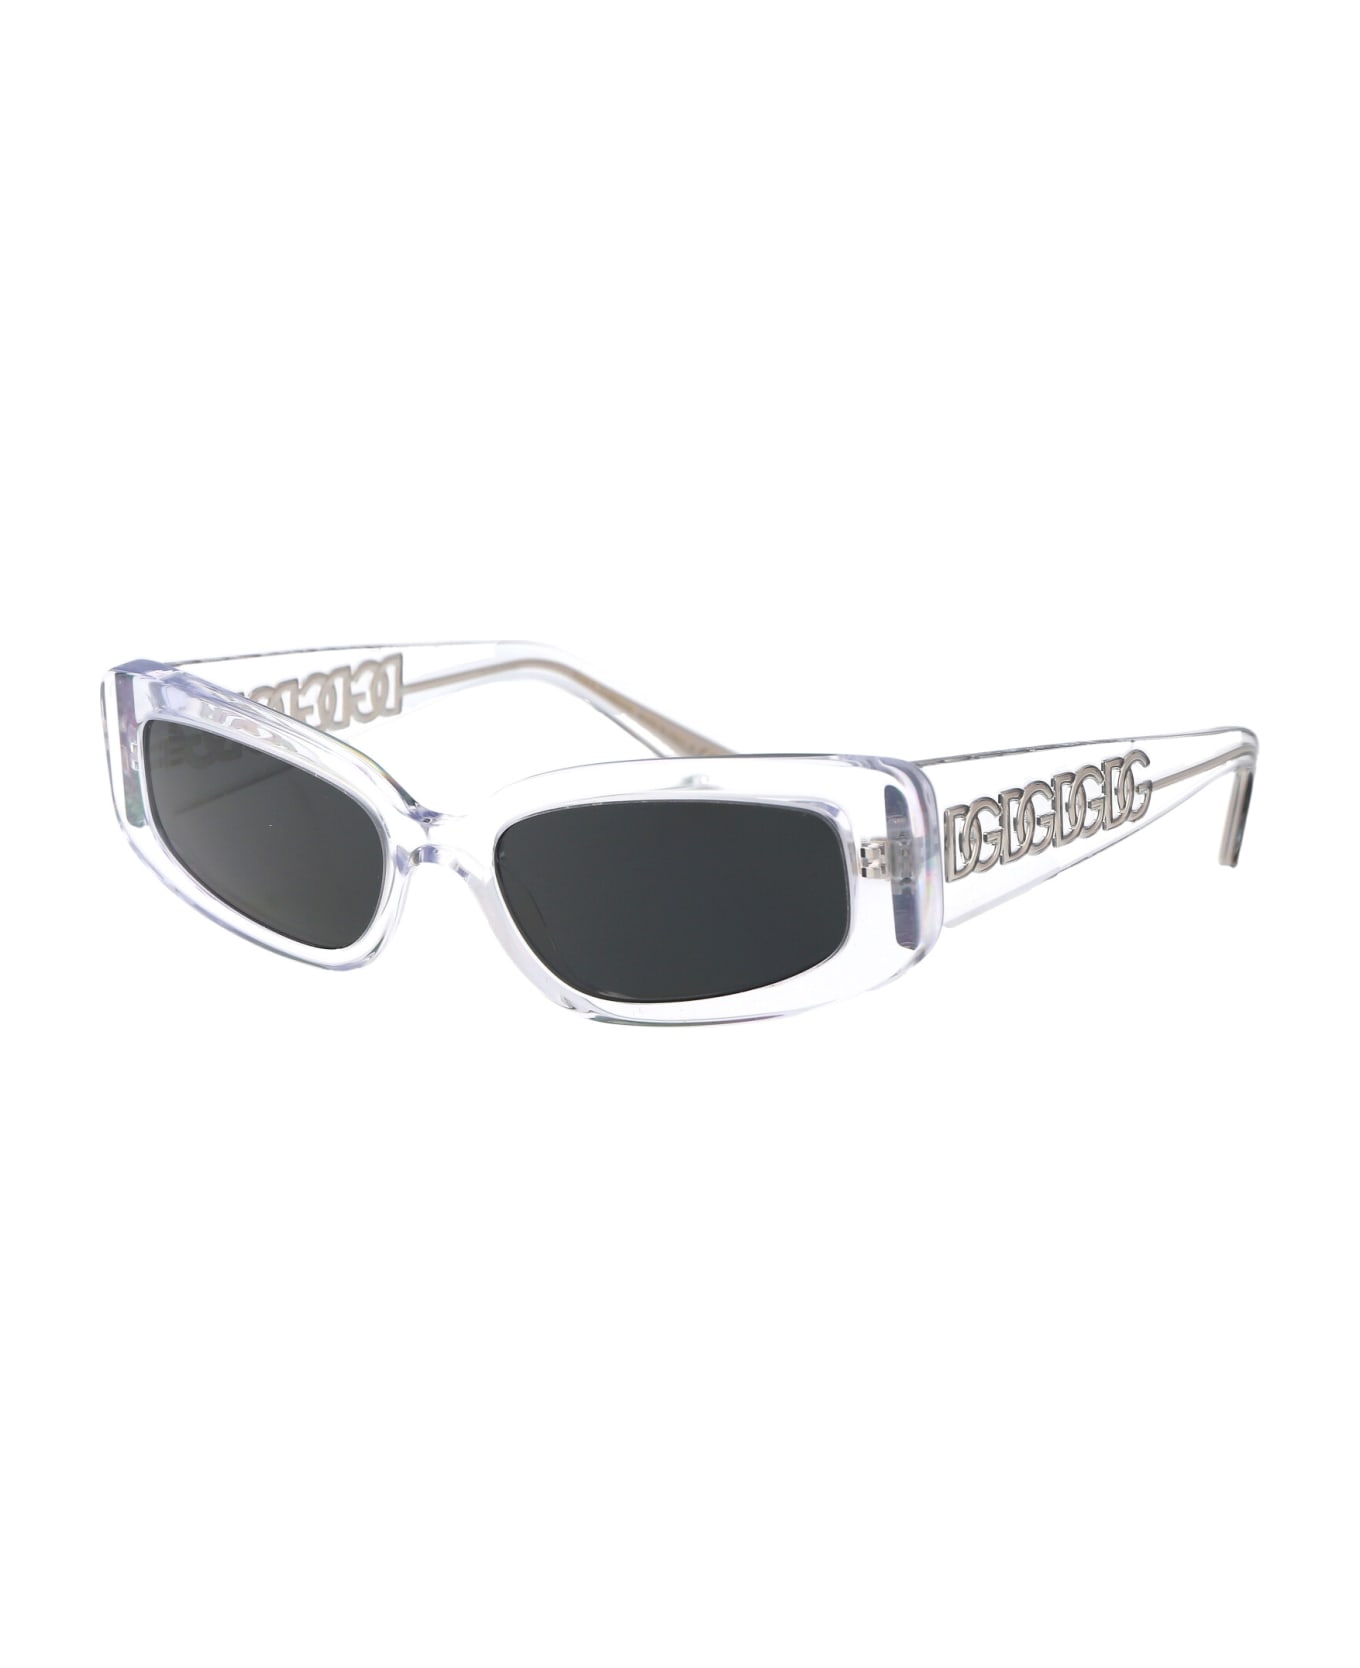 Dolce & Gabbana Eyewear 0dg4445 Sunglasses - 313387 Crystal